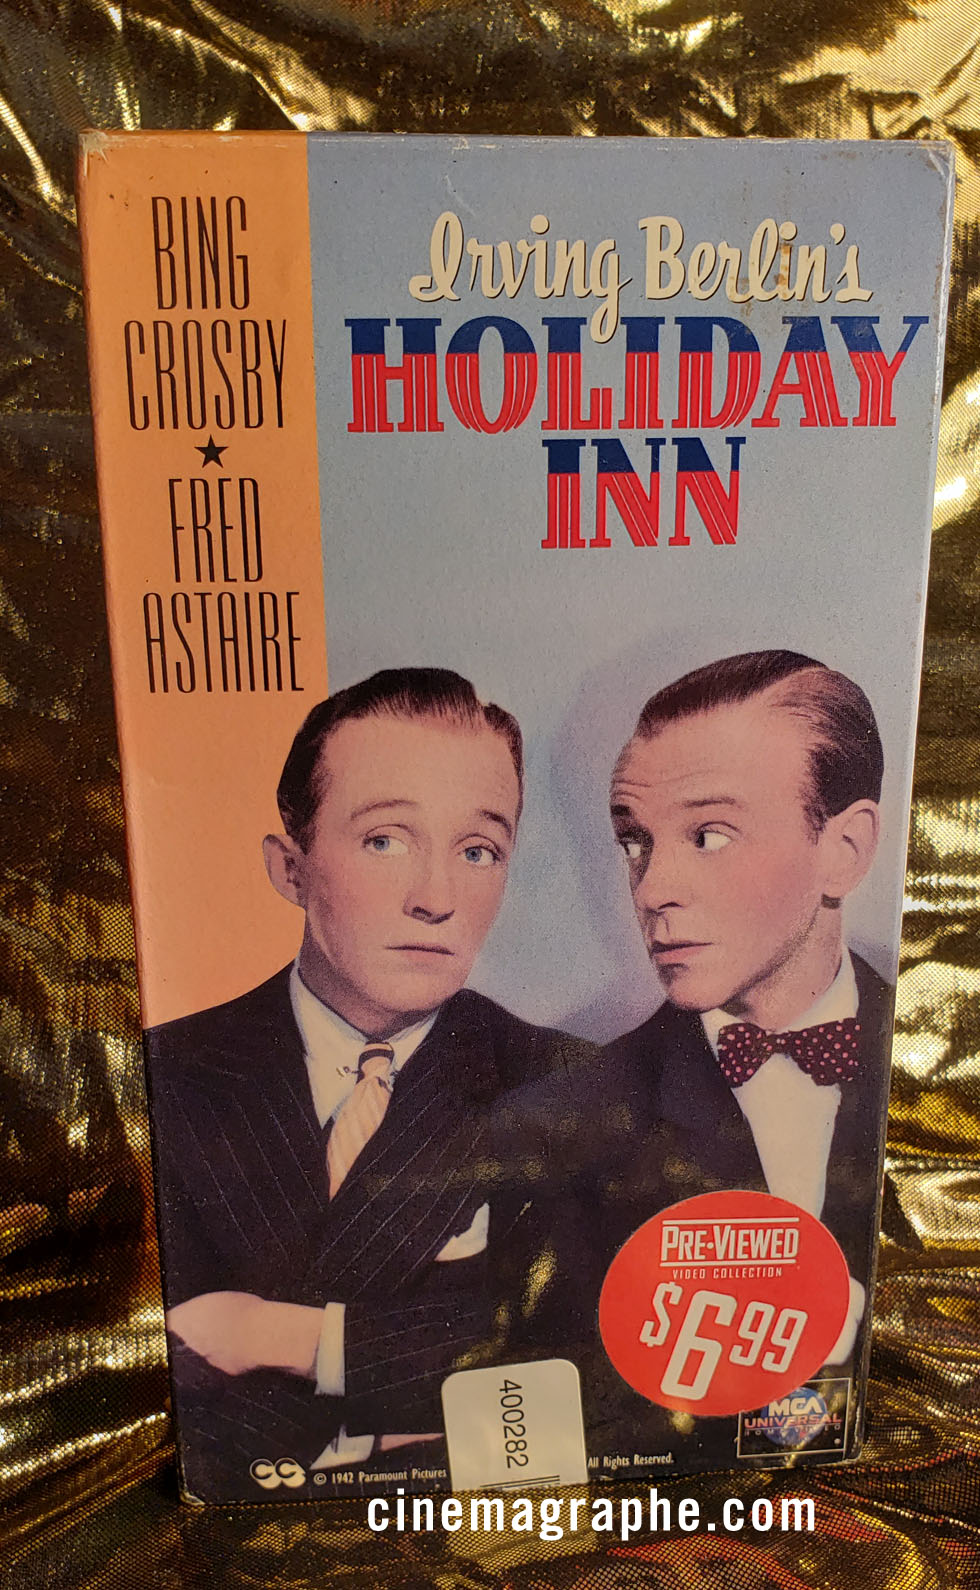 Cover VHS tape Holiday Inn